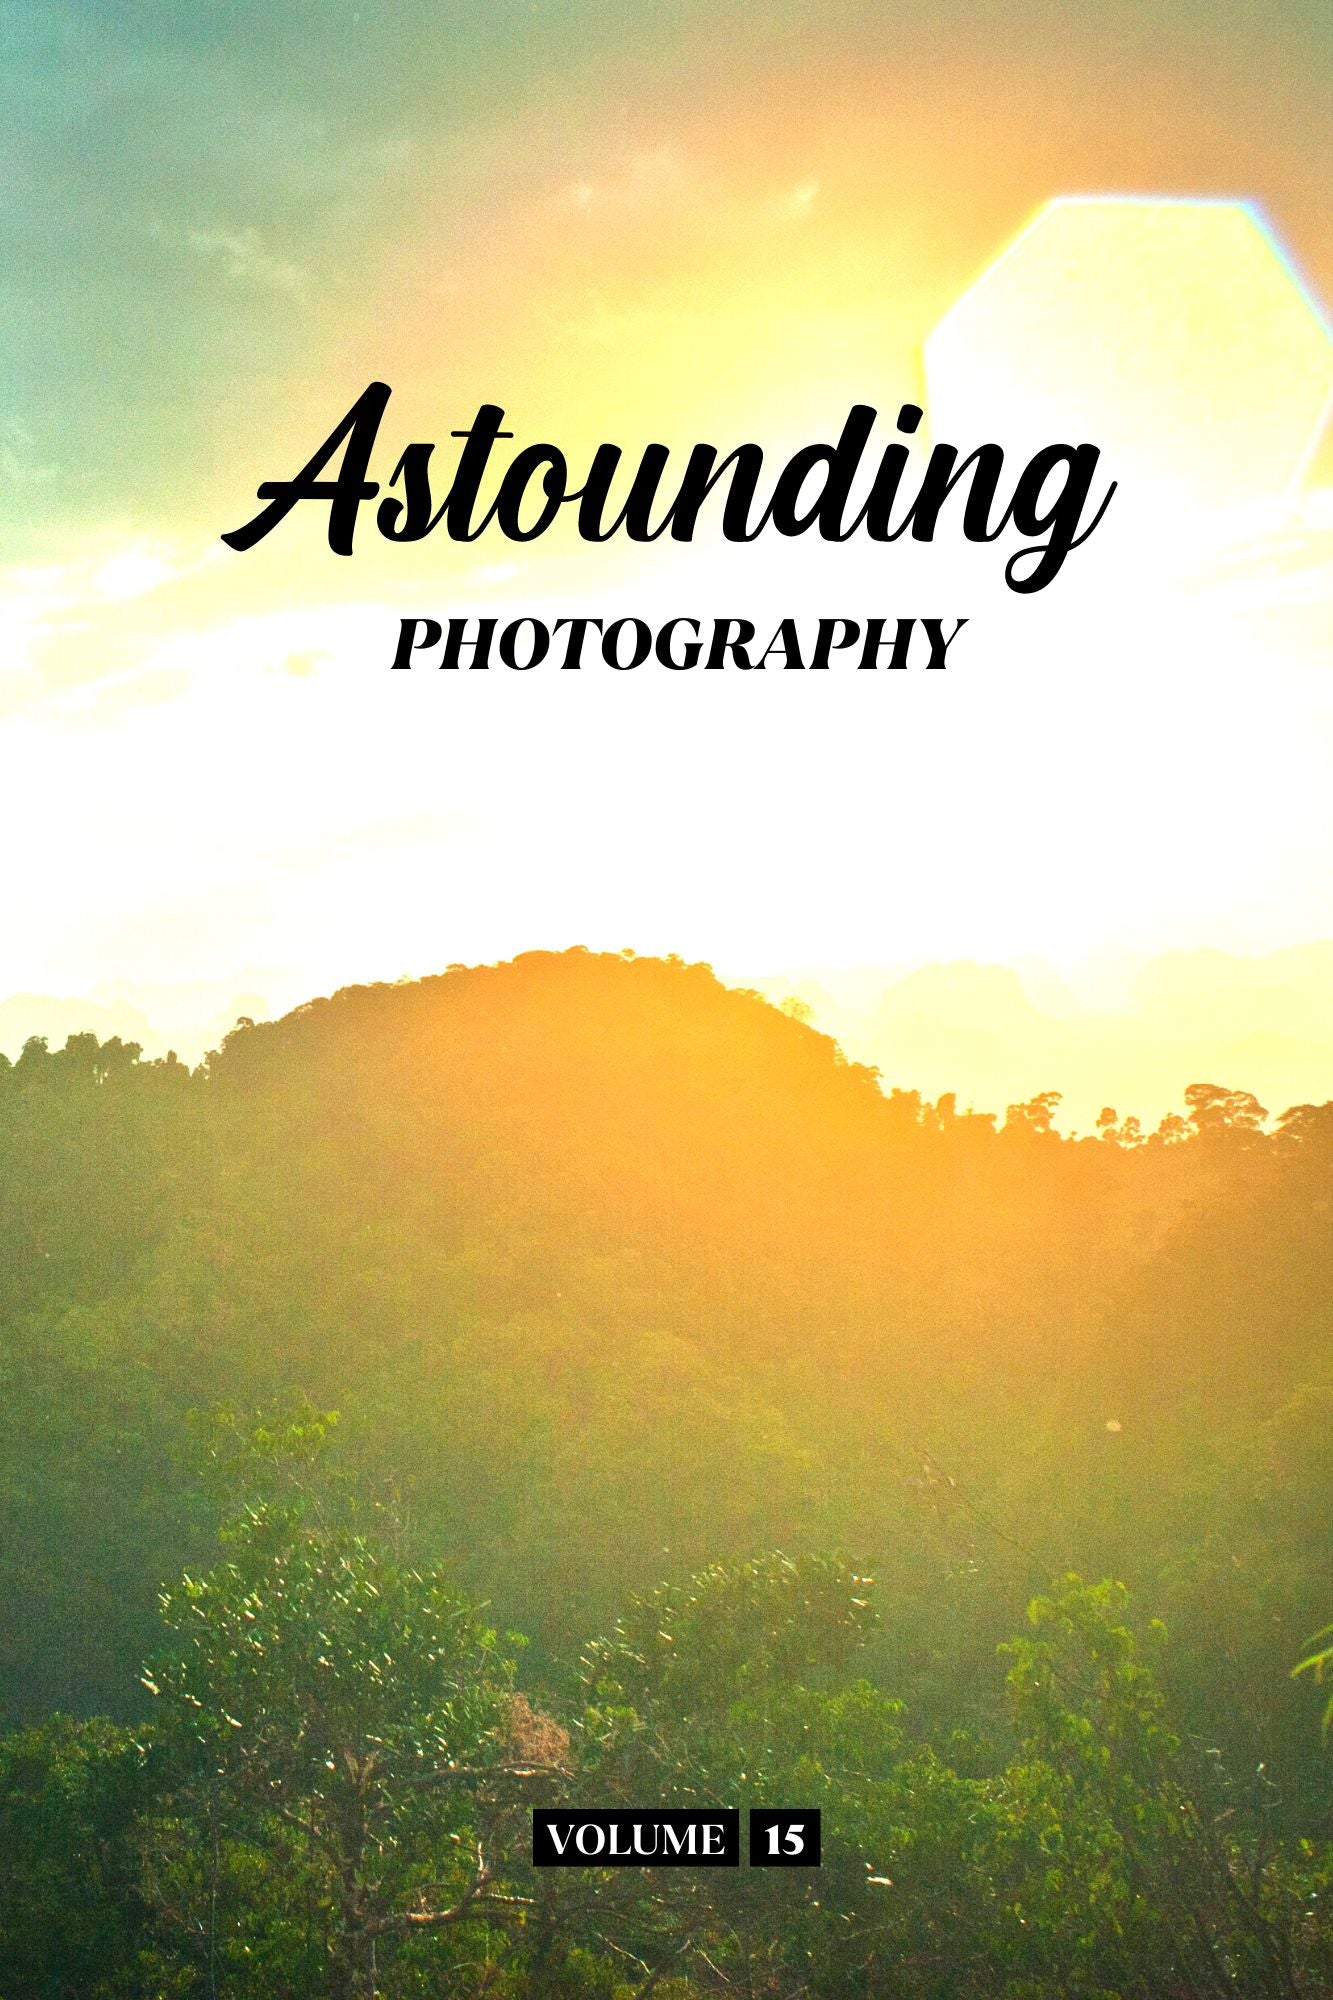 Astounding Photography Volume 15 (Physical Book)